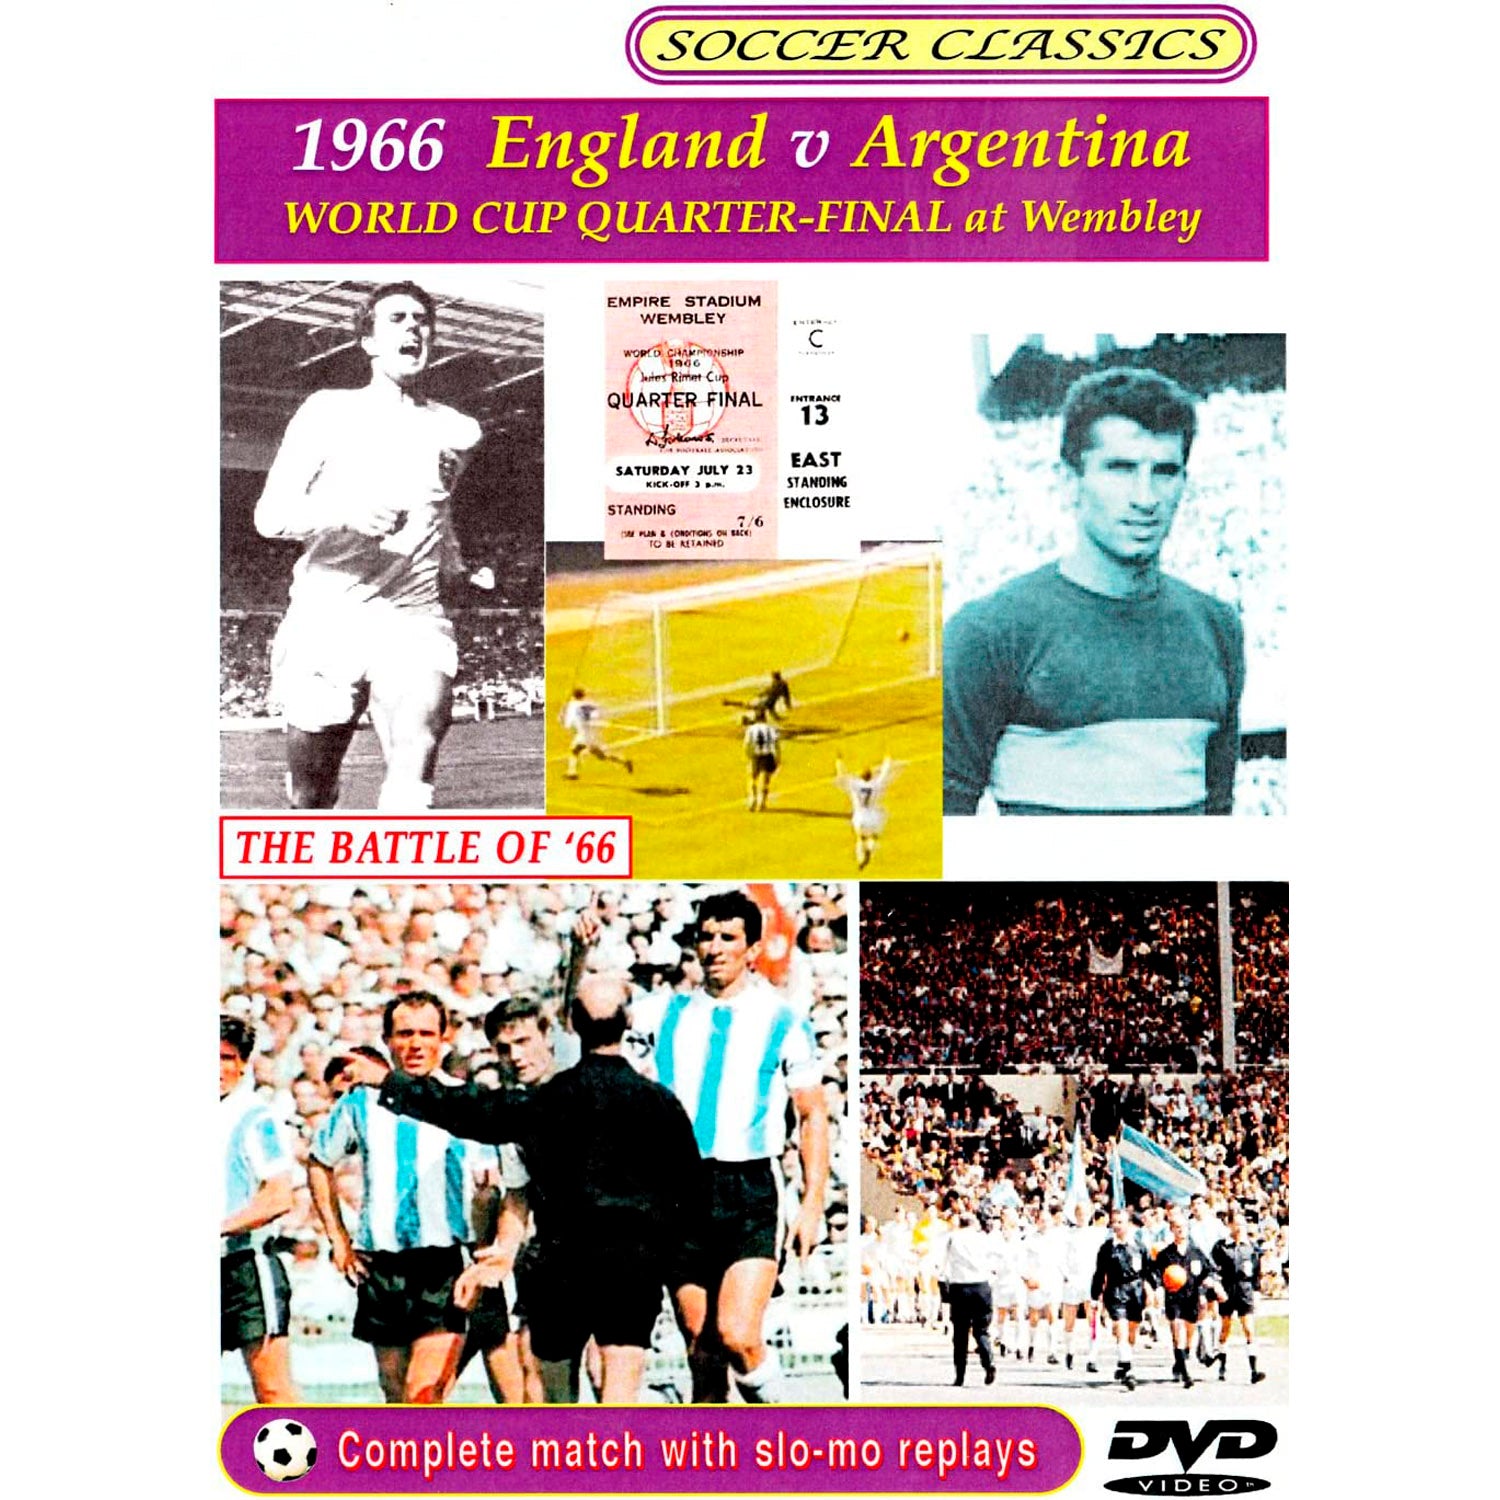 1966 World Cup Quarter-Final – England vs Argentina